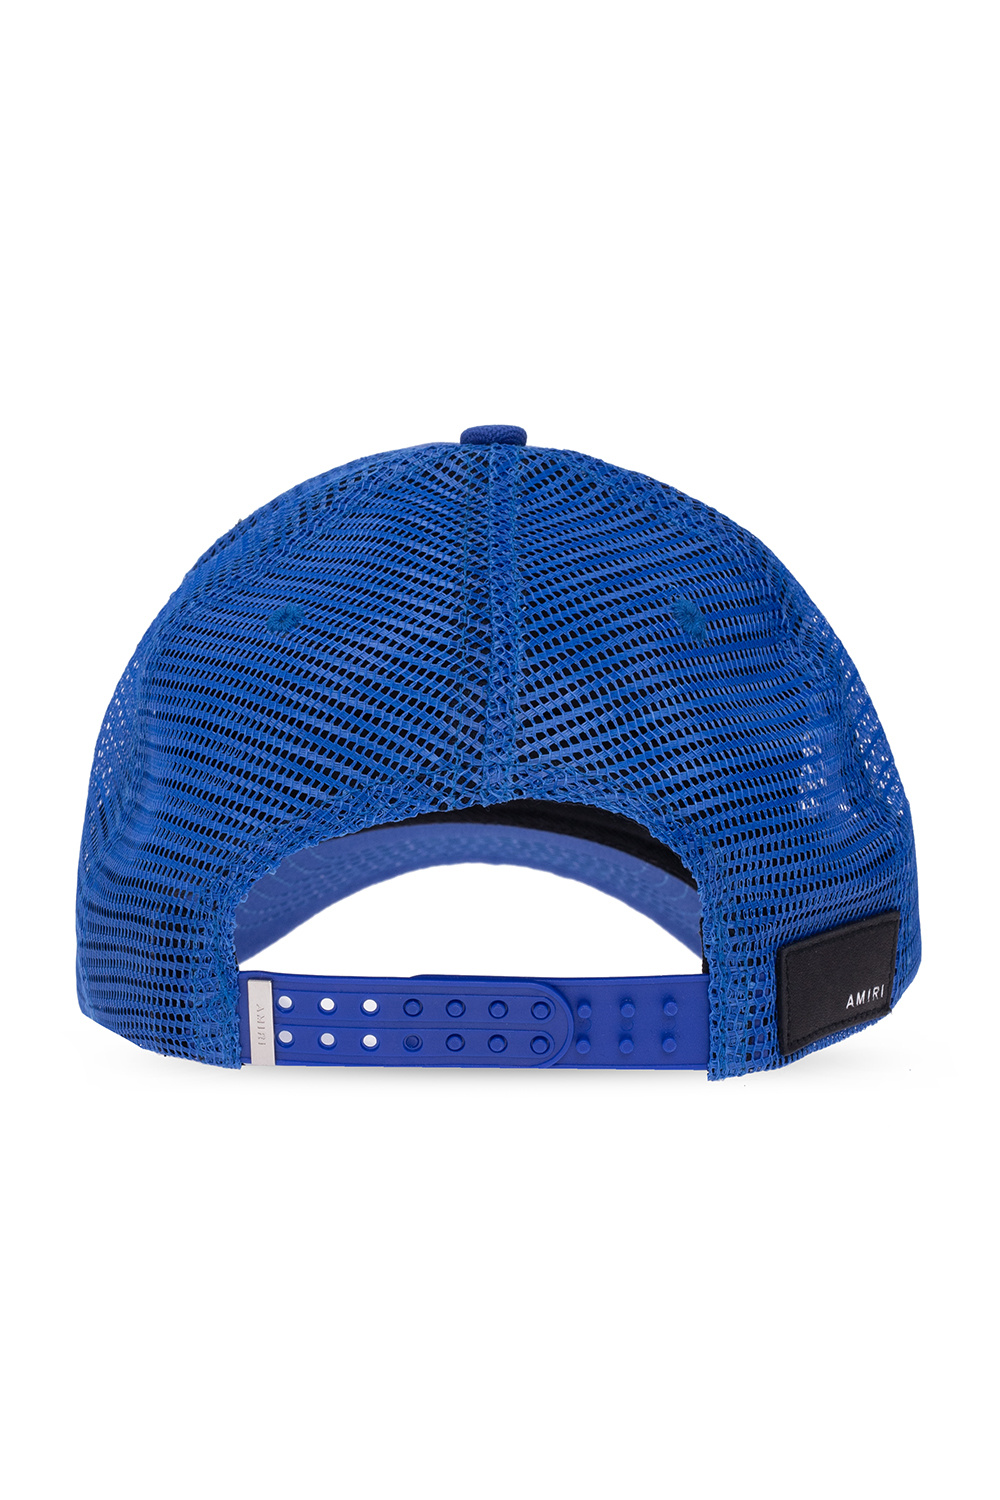 | Amiri trapper Baseball IetpShops cap | hat Men\'s Accessories | stretch-jersey